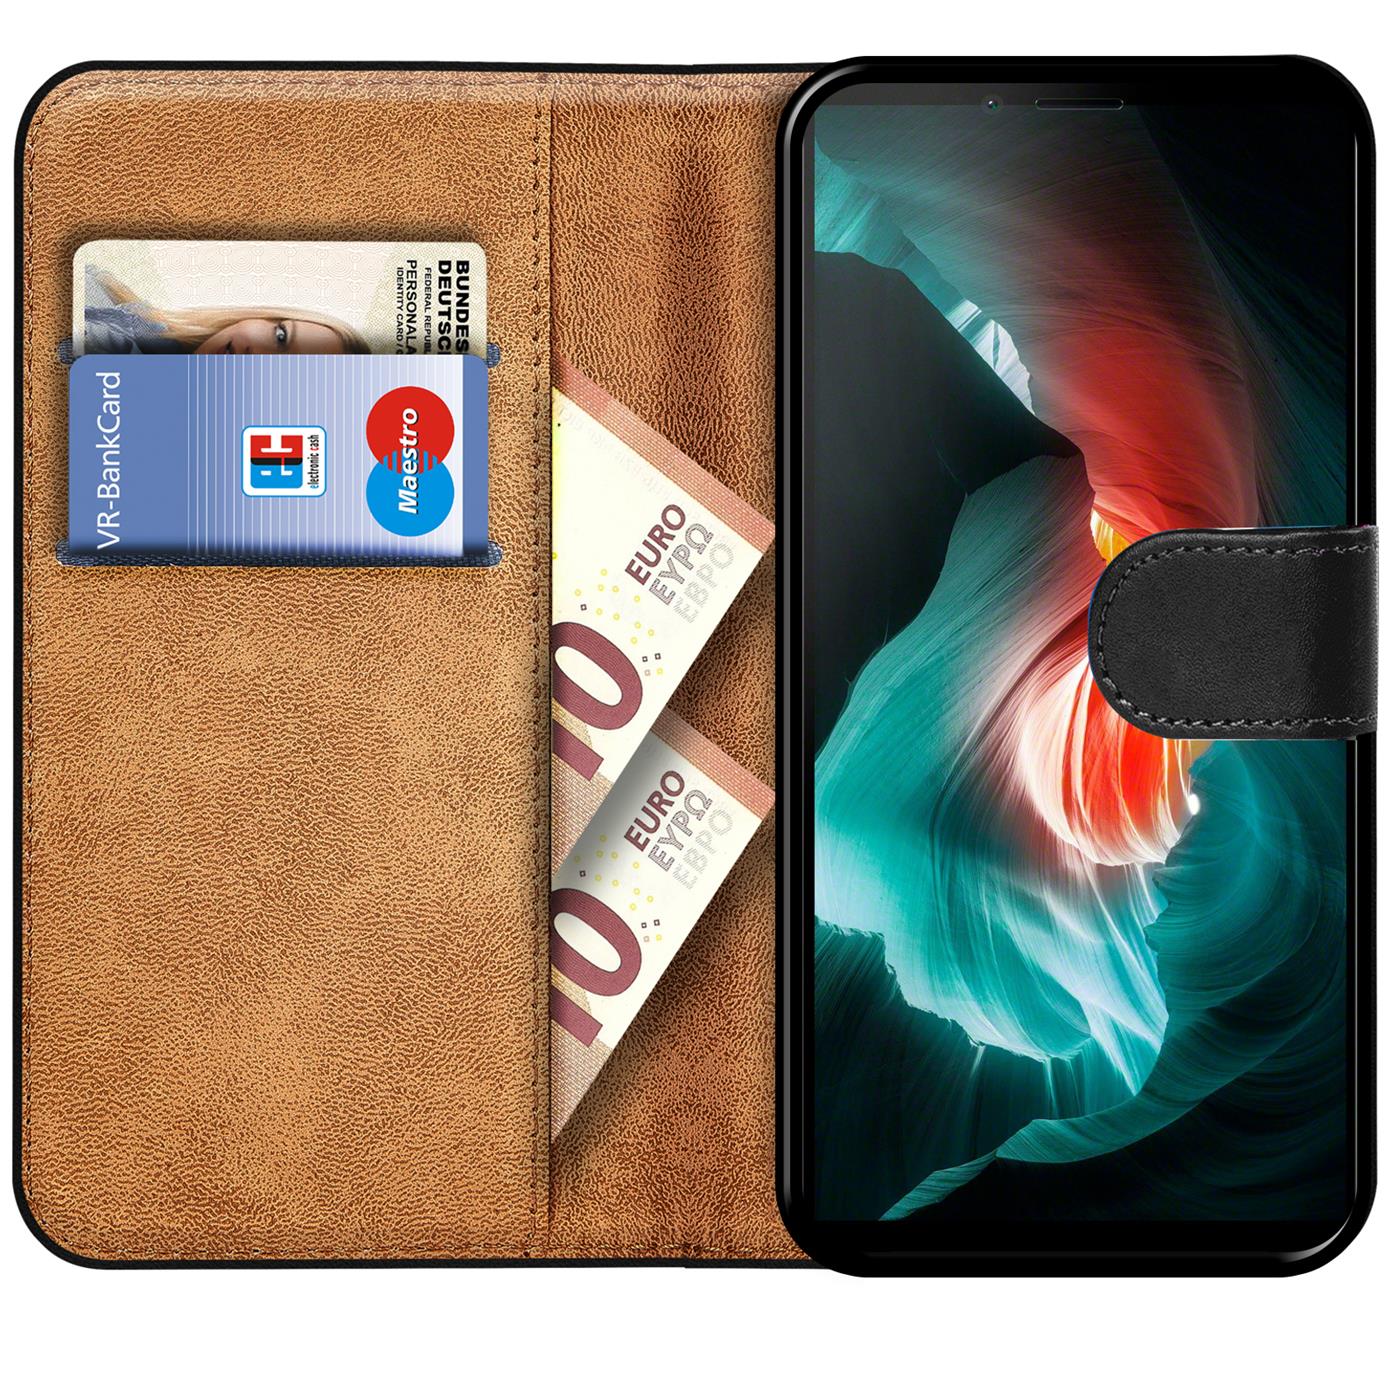 Uitrusting Verandering Leven van Case for Sony Xperia Wiko mobile phone bag slim flip case book cover wallet  | eBay